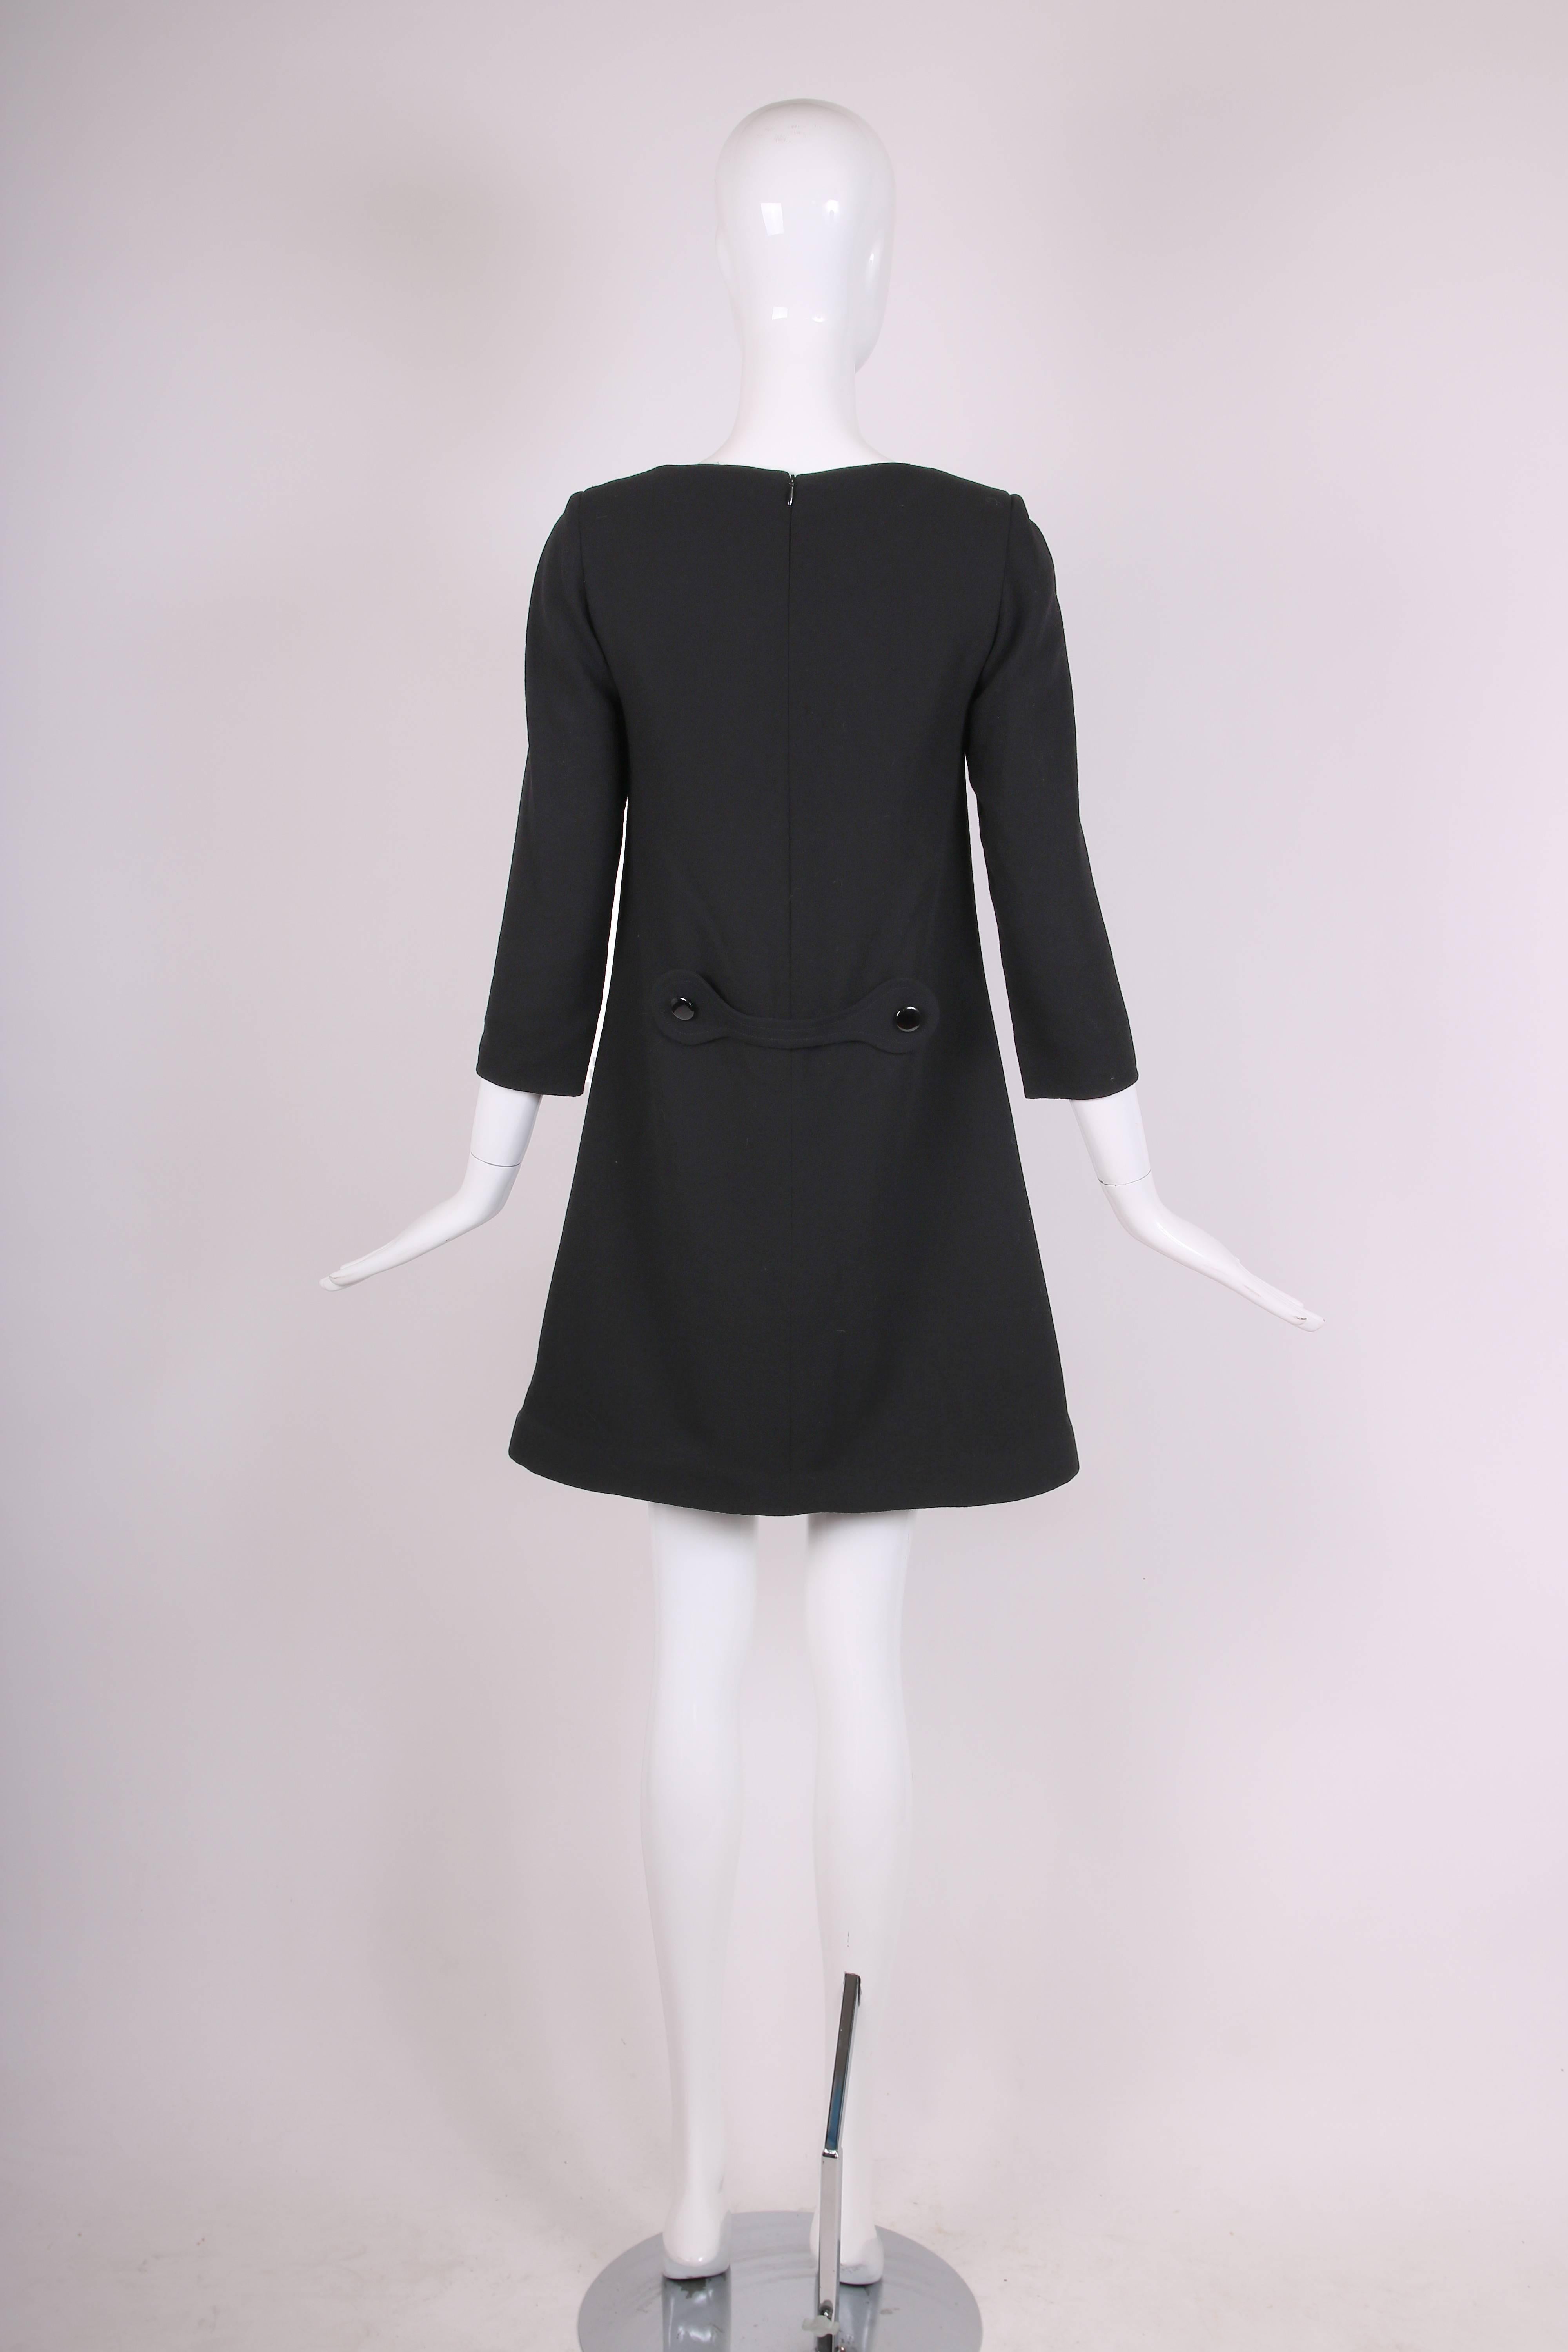 Pierre Cardin Haute Couture Mod Black Cocktail Dress w/Silver Pleather Pockets 1